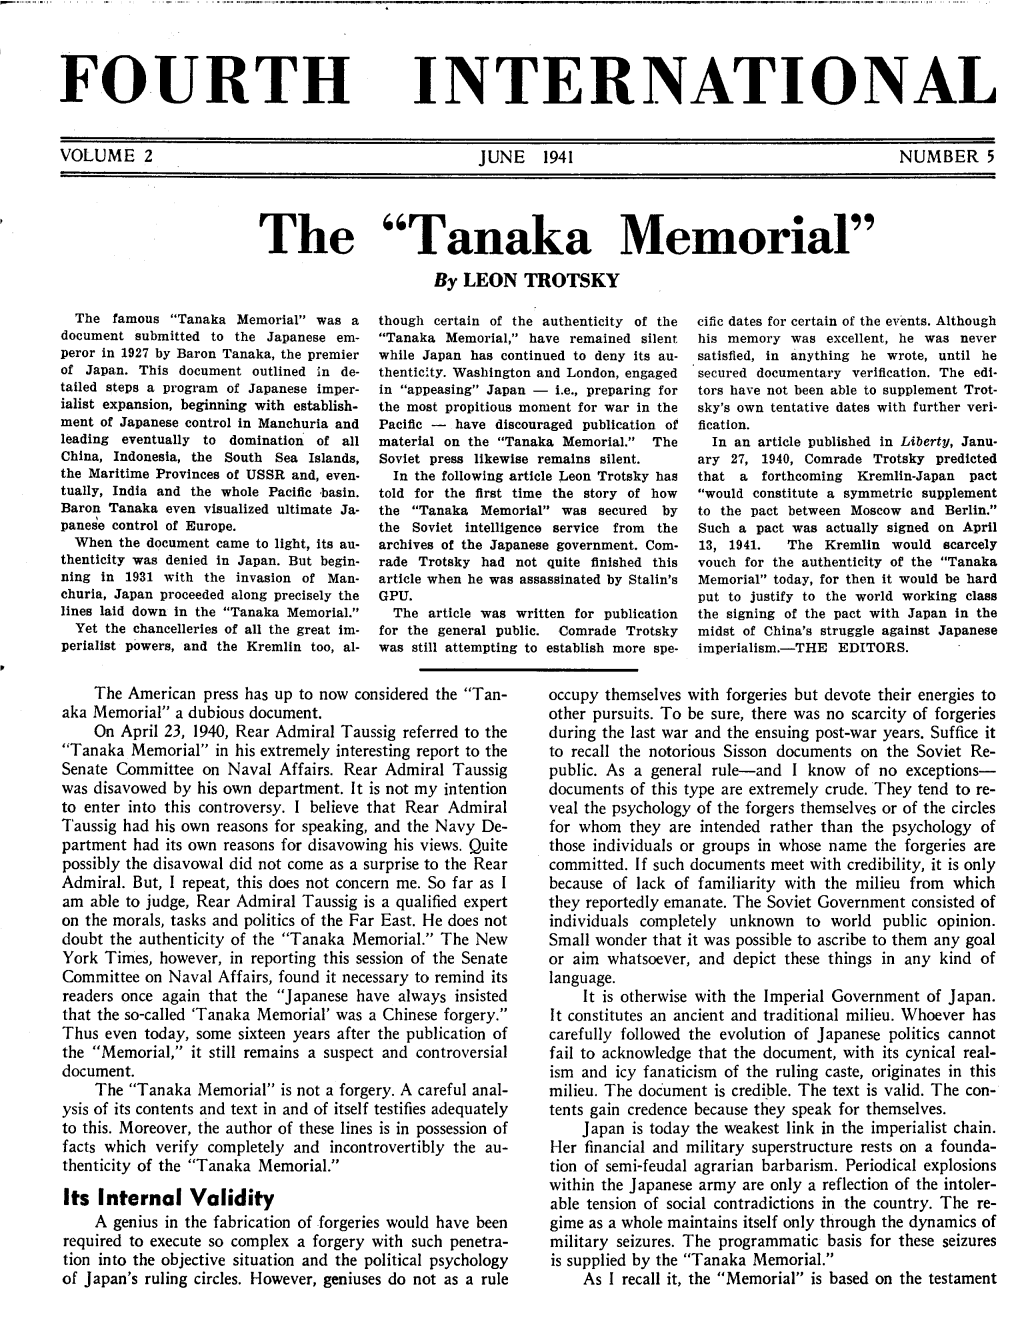 Trotsky on the Tanaka Memorial June 1941